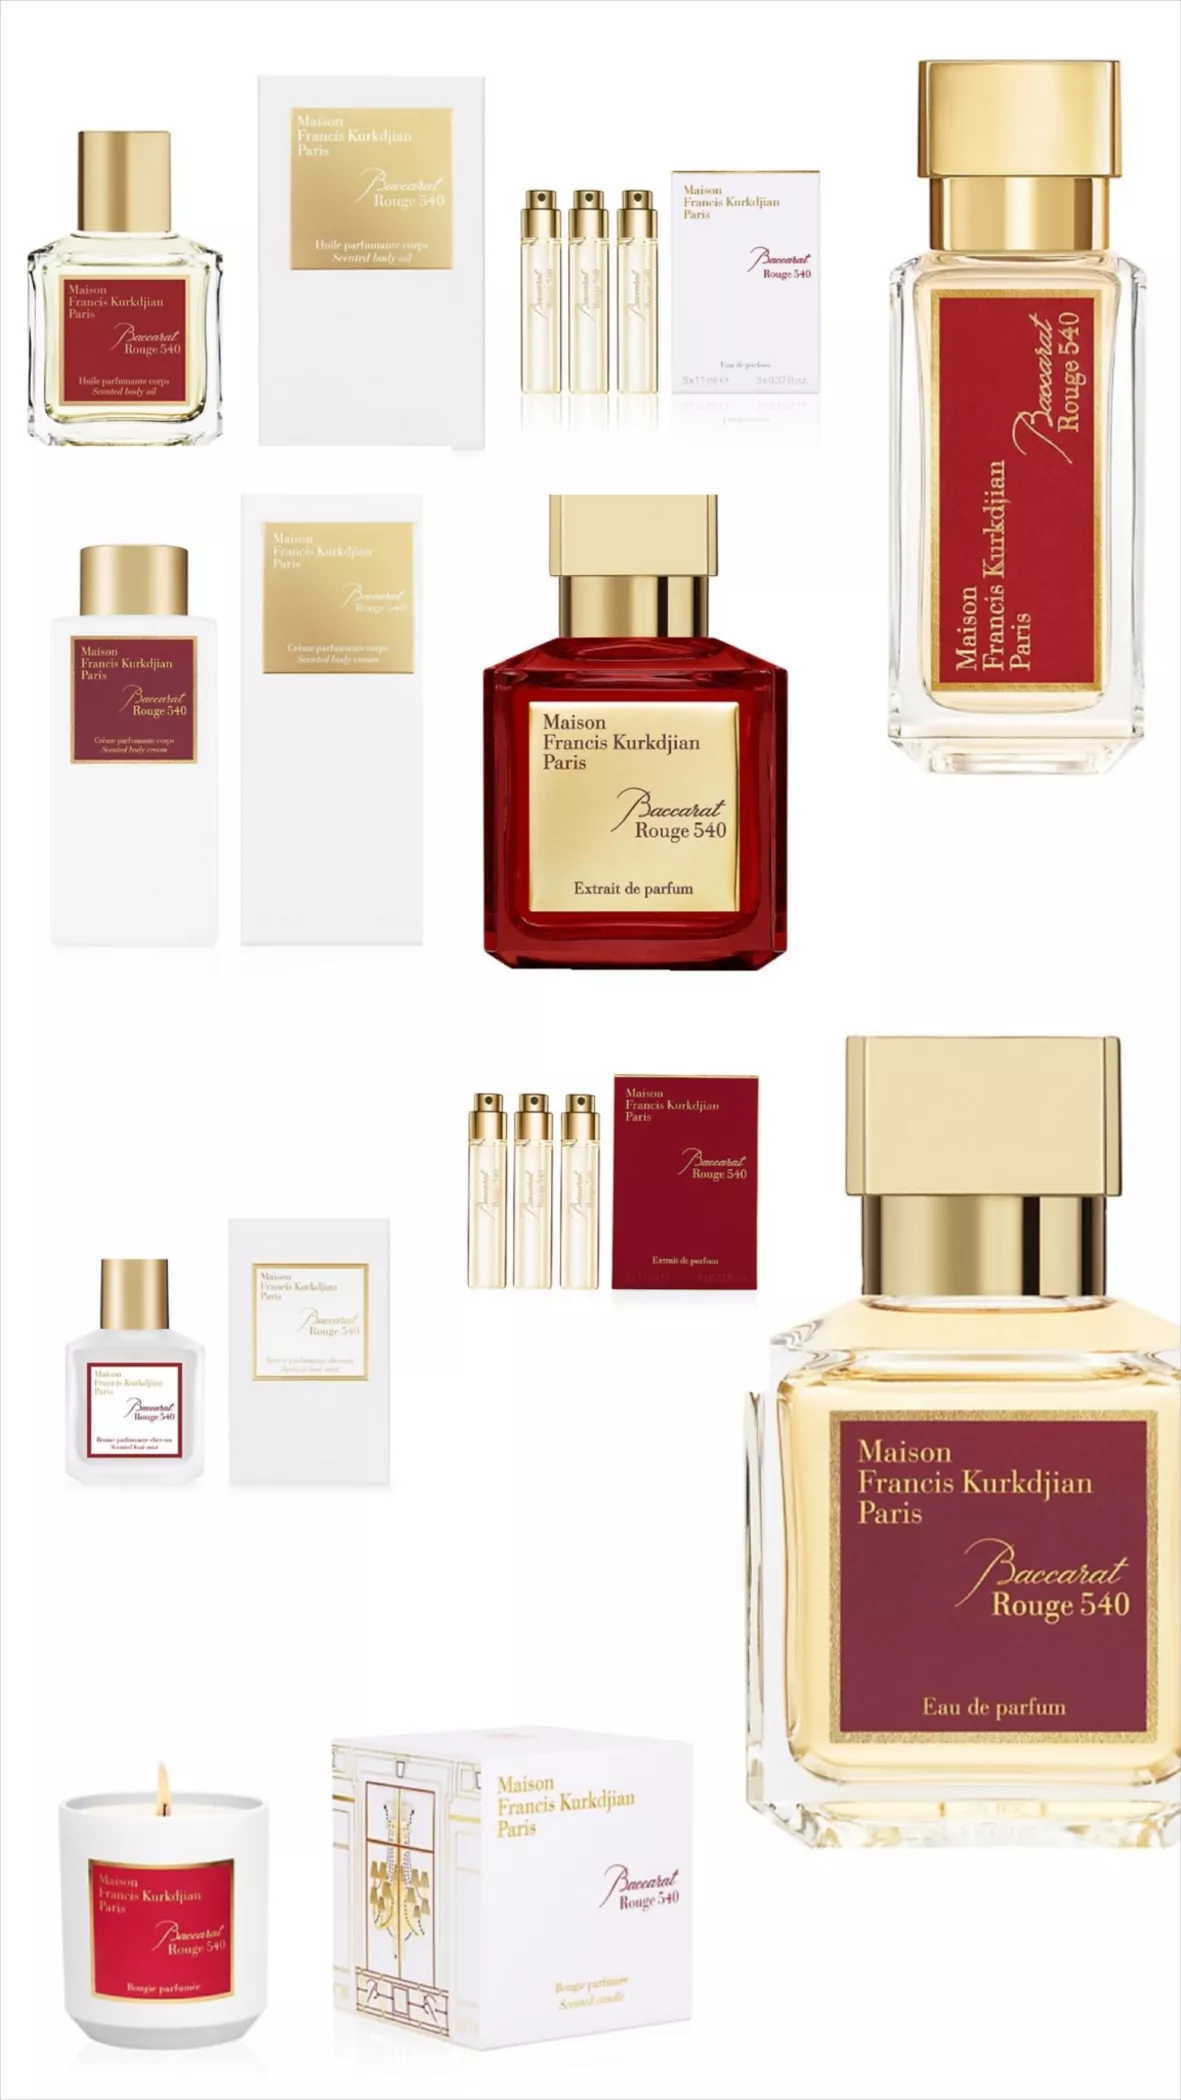 Maison Francis Kurkdjian - Baccarat Rouge 540 Extrait Perfume Oil